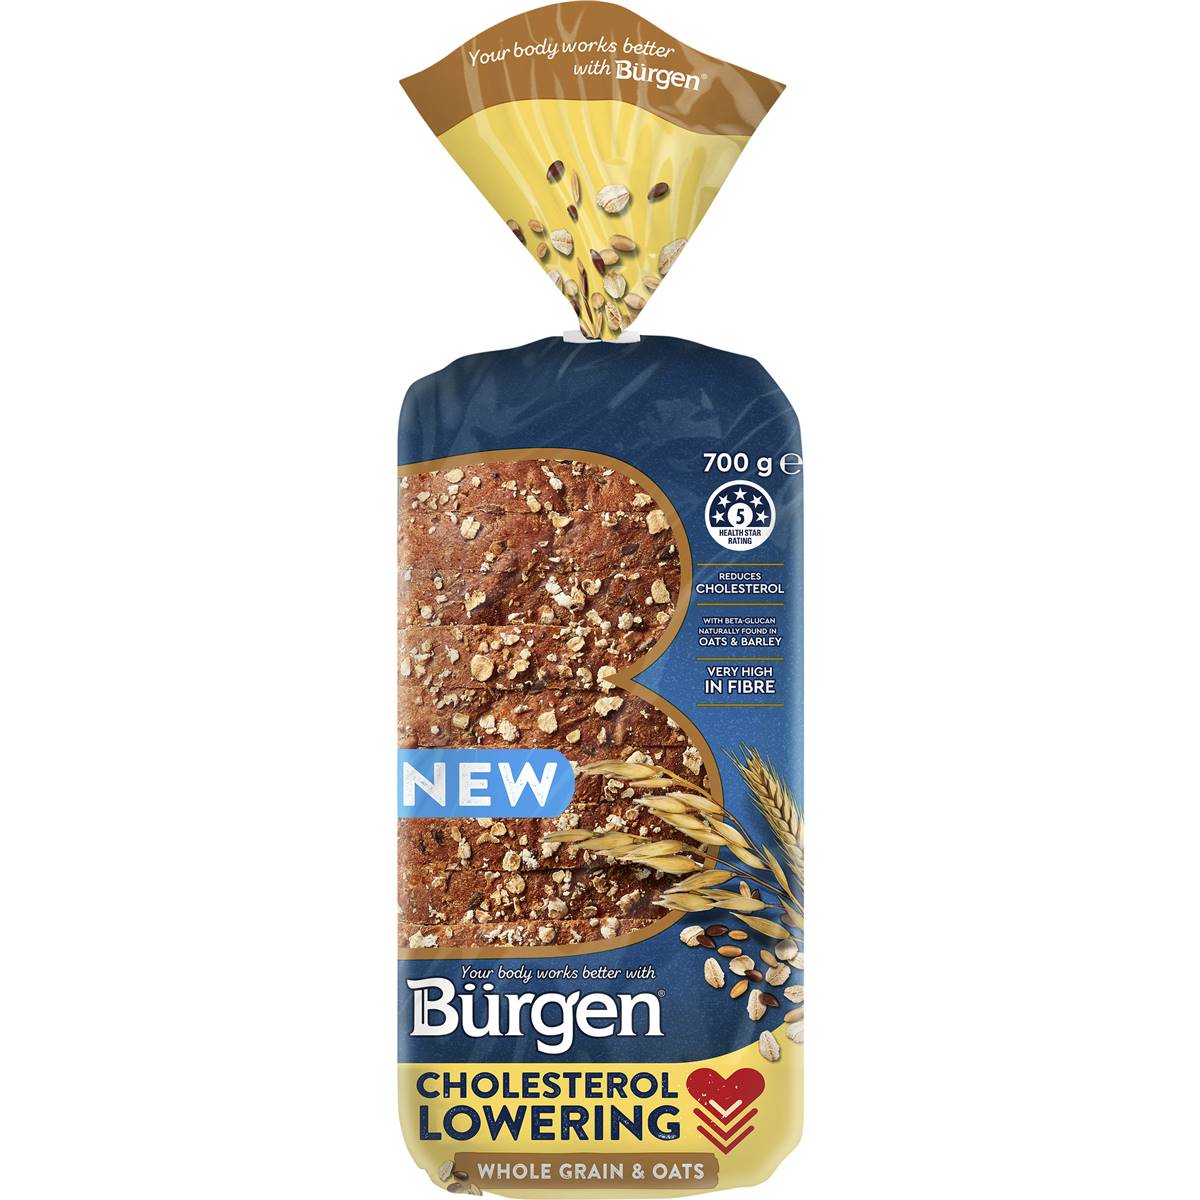 Calories in Burgen Cholesterol Lowering Whole Grain & Oats Loaf